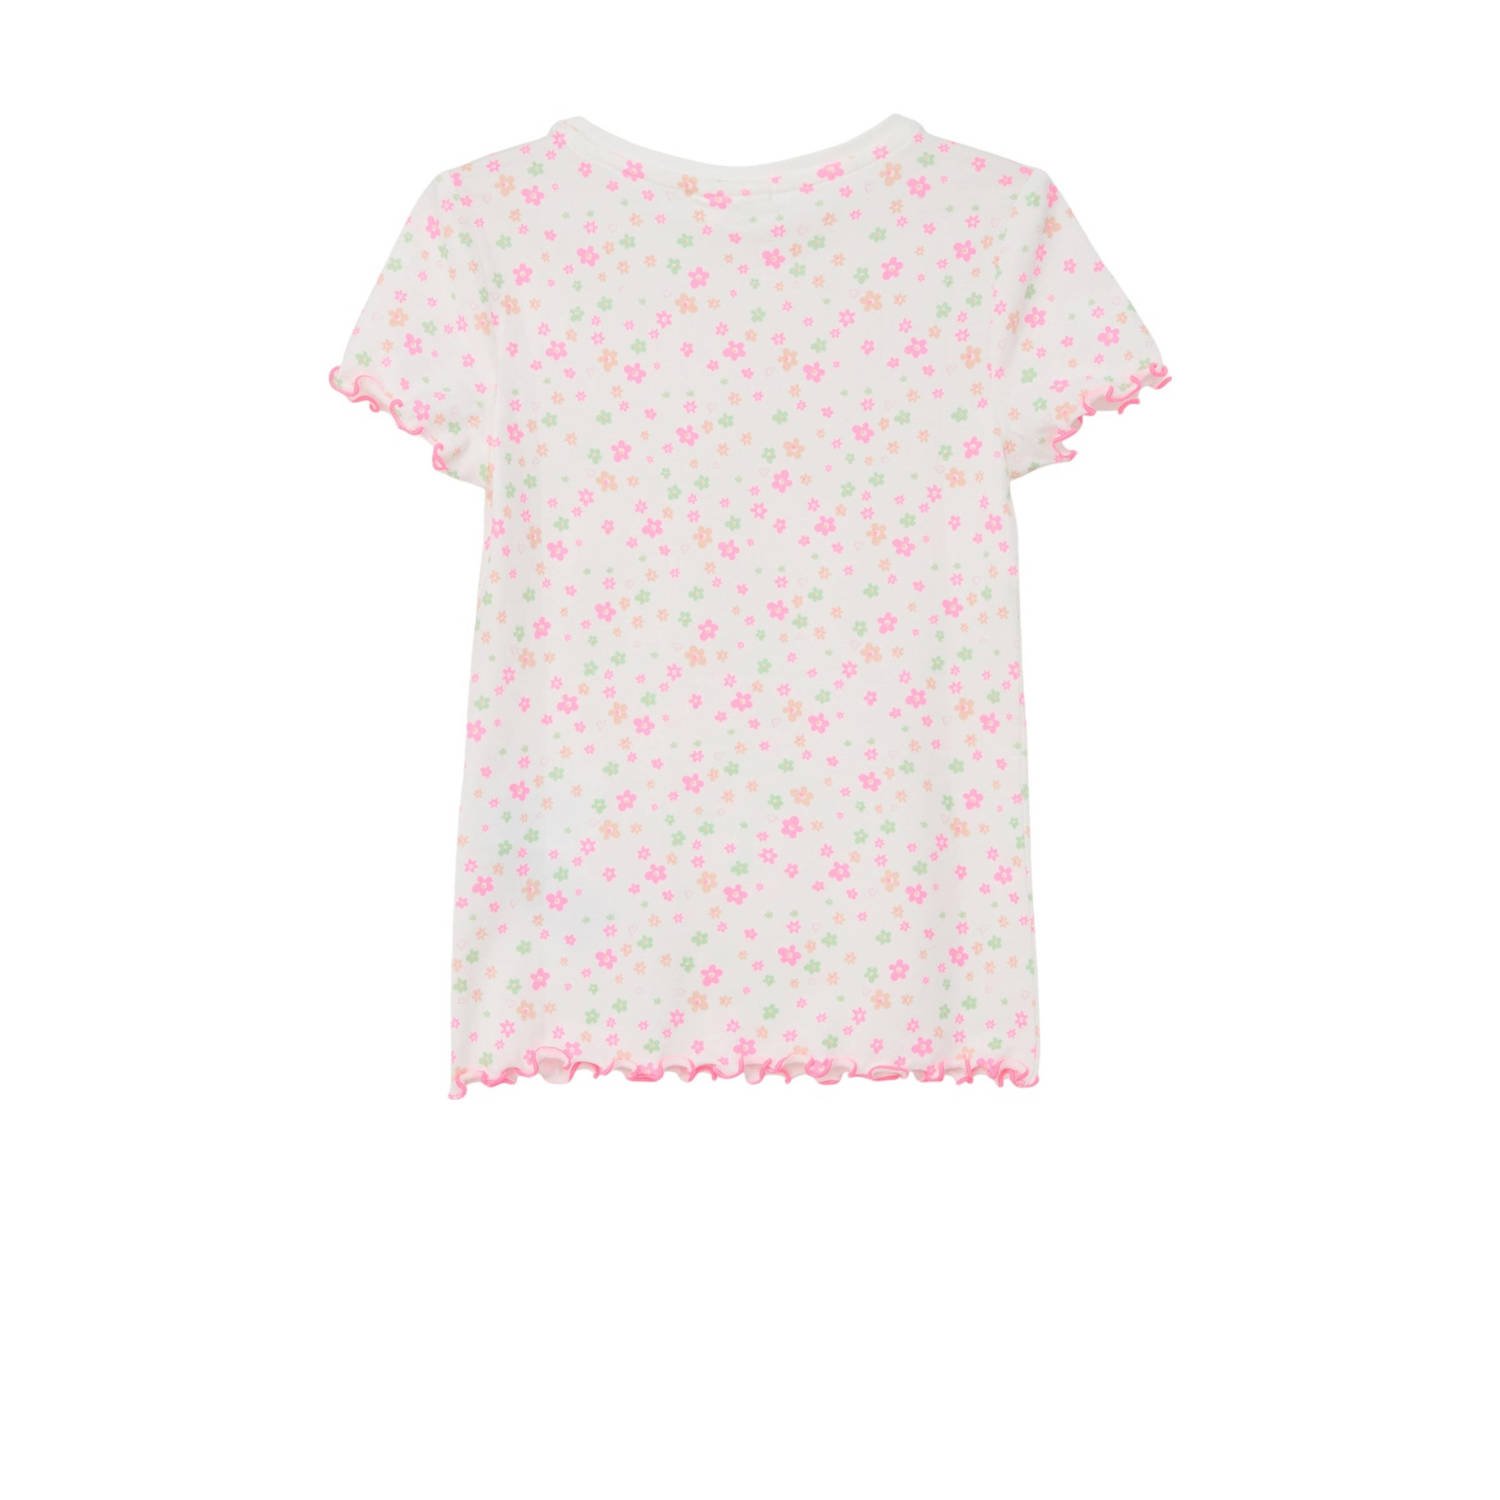 s.Oliver gebloemd T-shirt wit roze